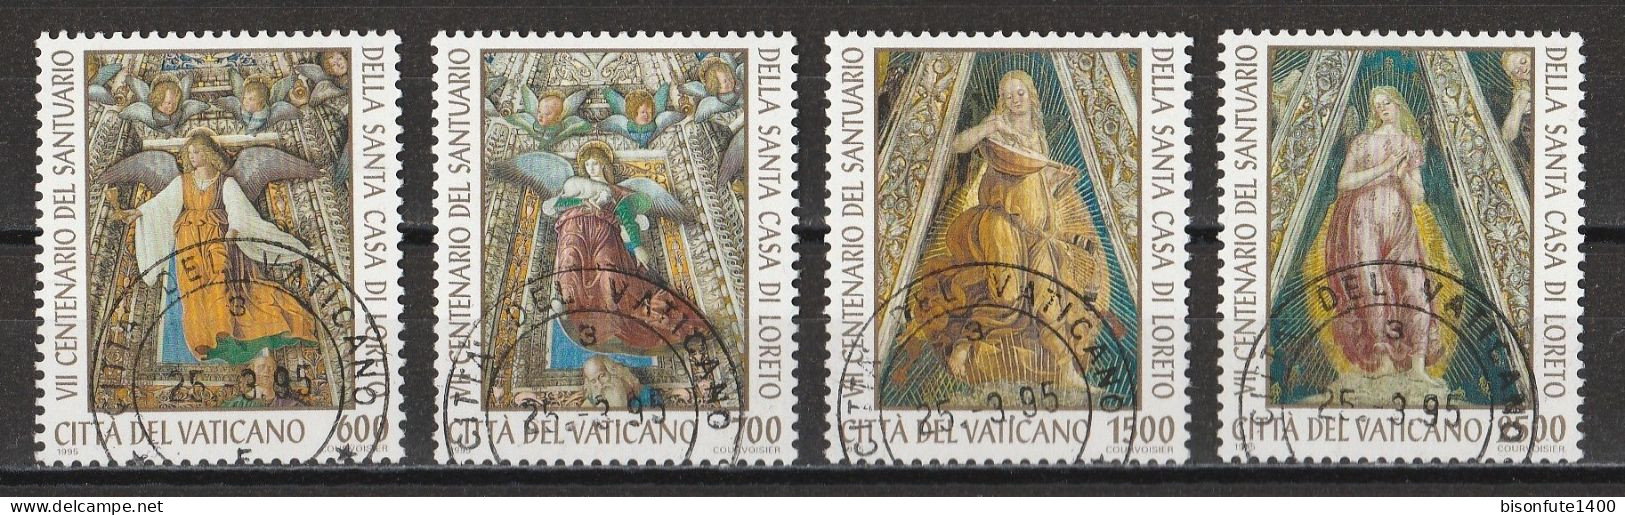 Vatican 1995 : Timbres Yvert & Tellier N° 1000 - 1001 - 1002 Et 1003 Oblitérés - Gebraucht